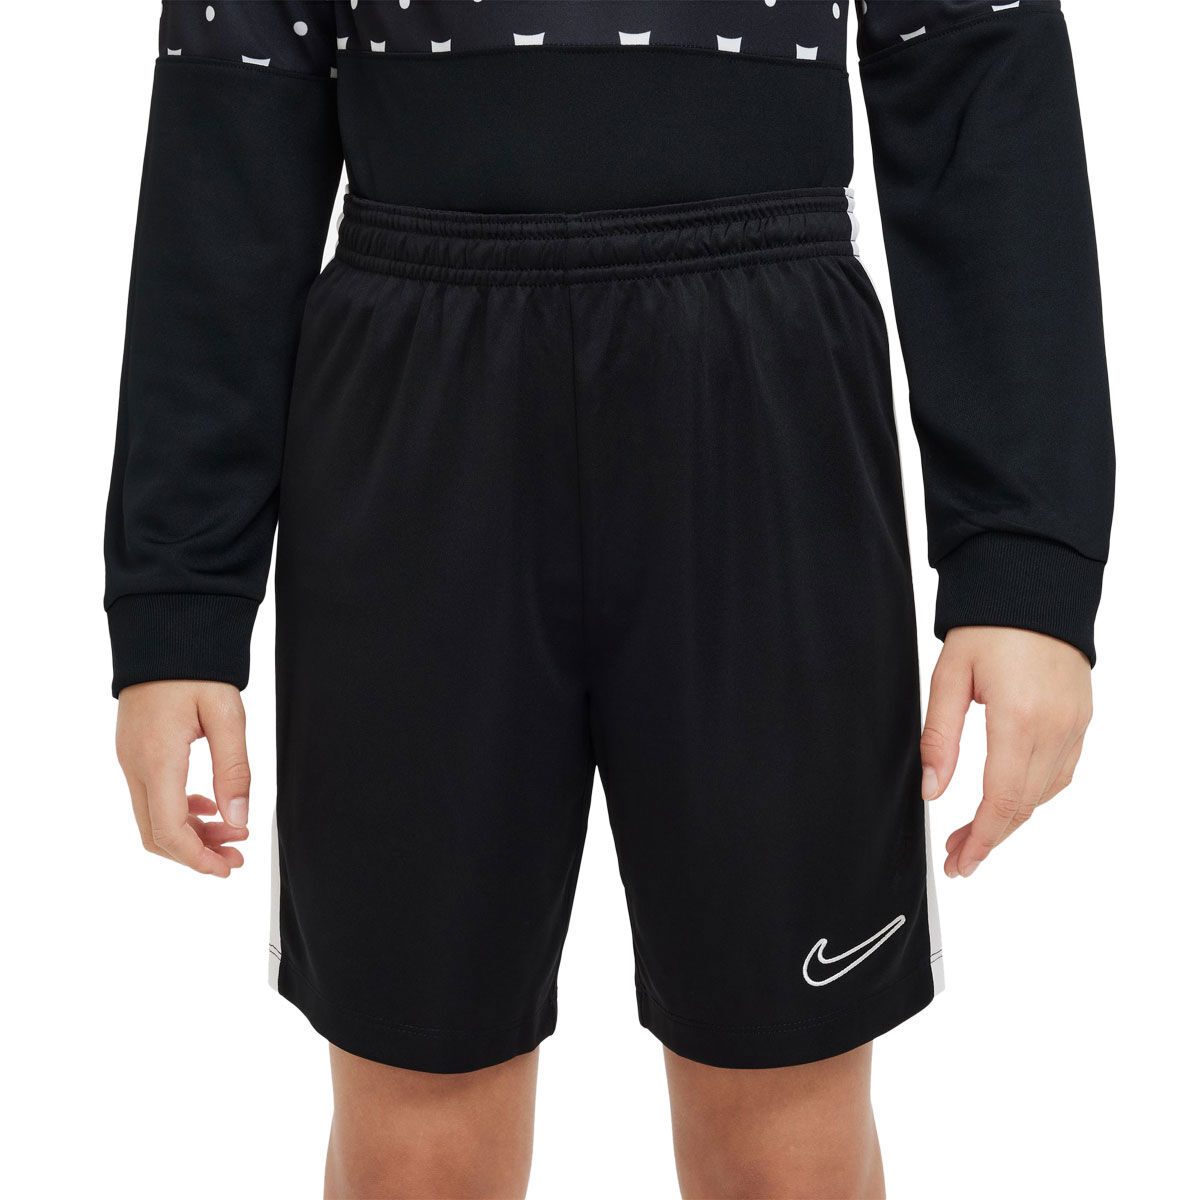 Football Kits - Soccer Apparel, Uniforms & more - rebel